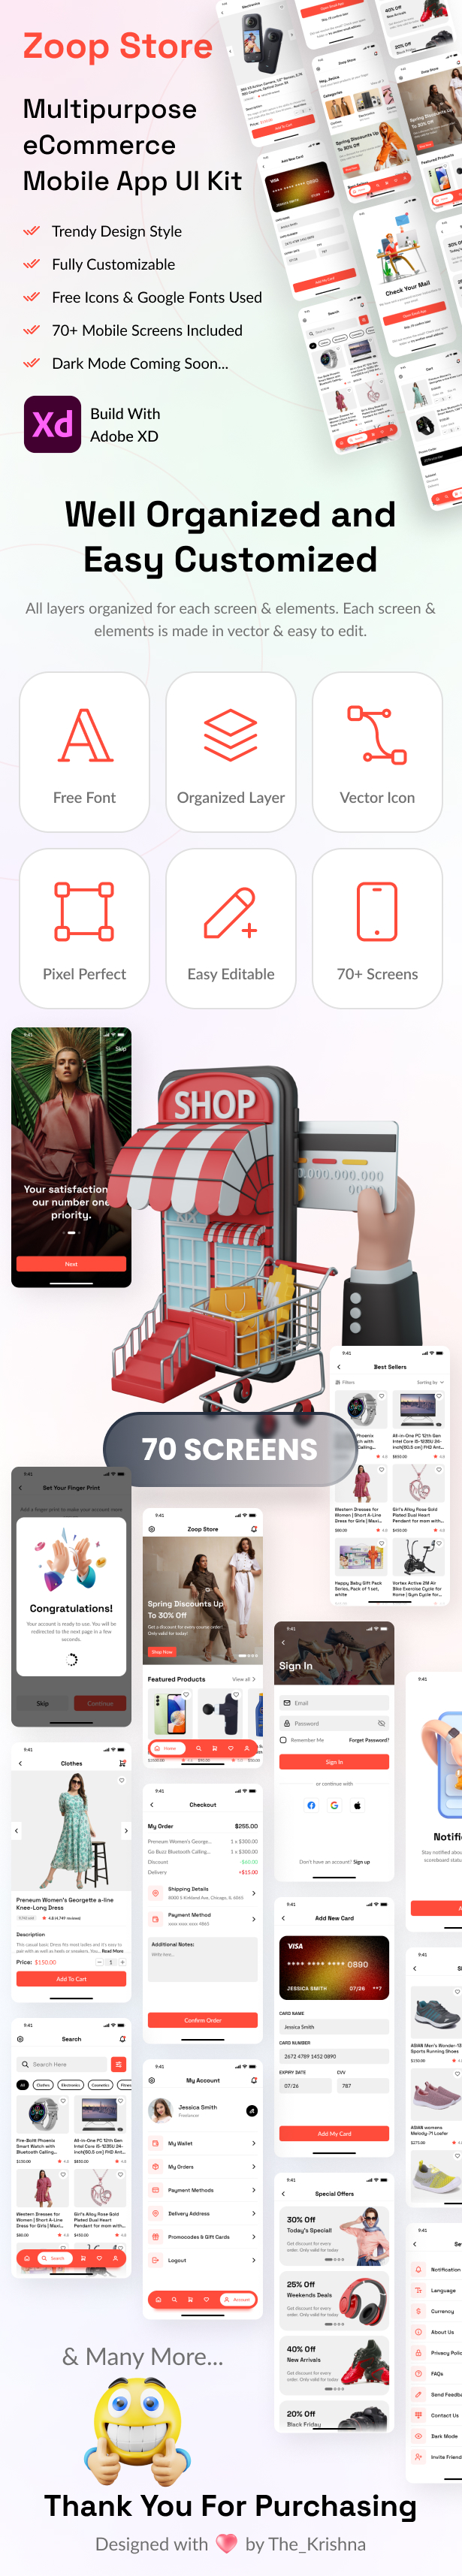 Multipurpose eCommerce Mobile App UI Kit XD Template - Zoopstore - 3